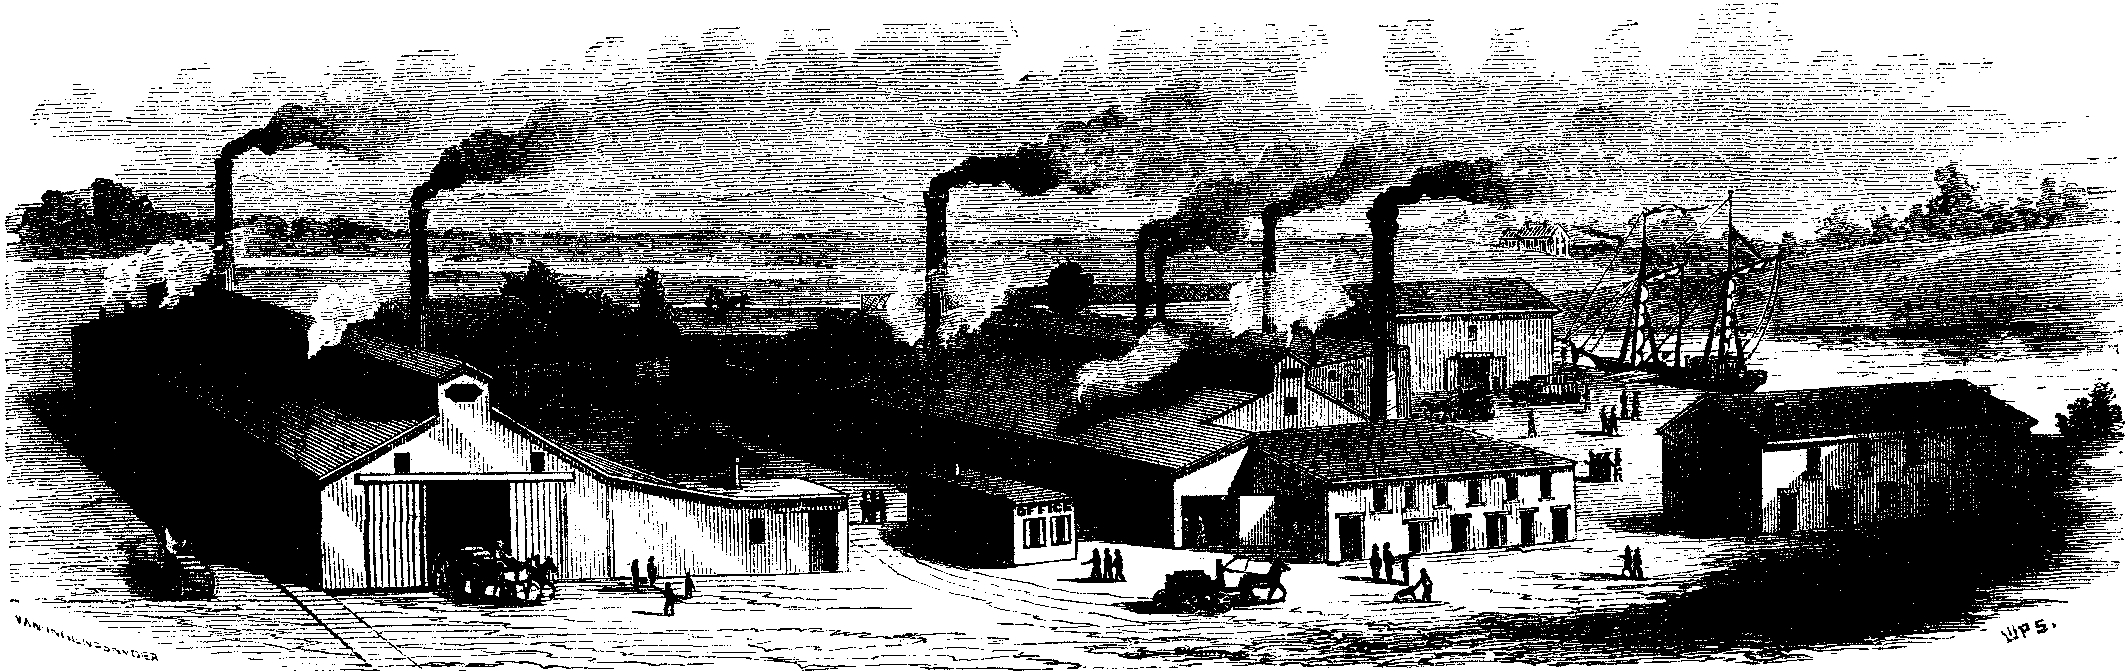 old school illustration of an iron mill